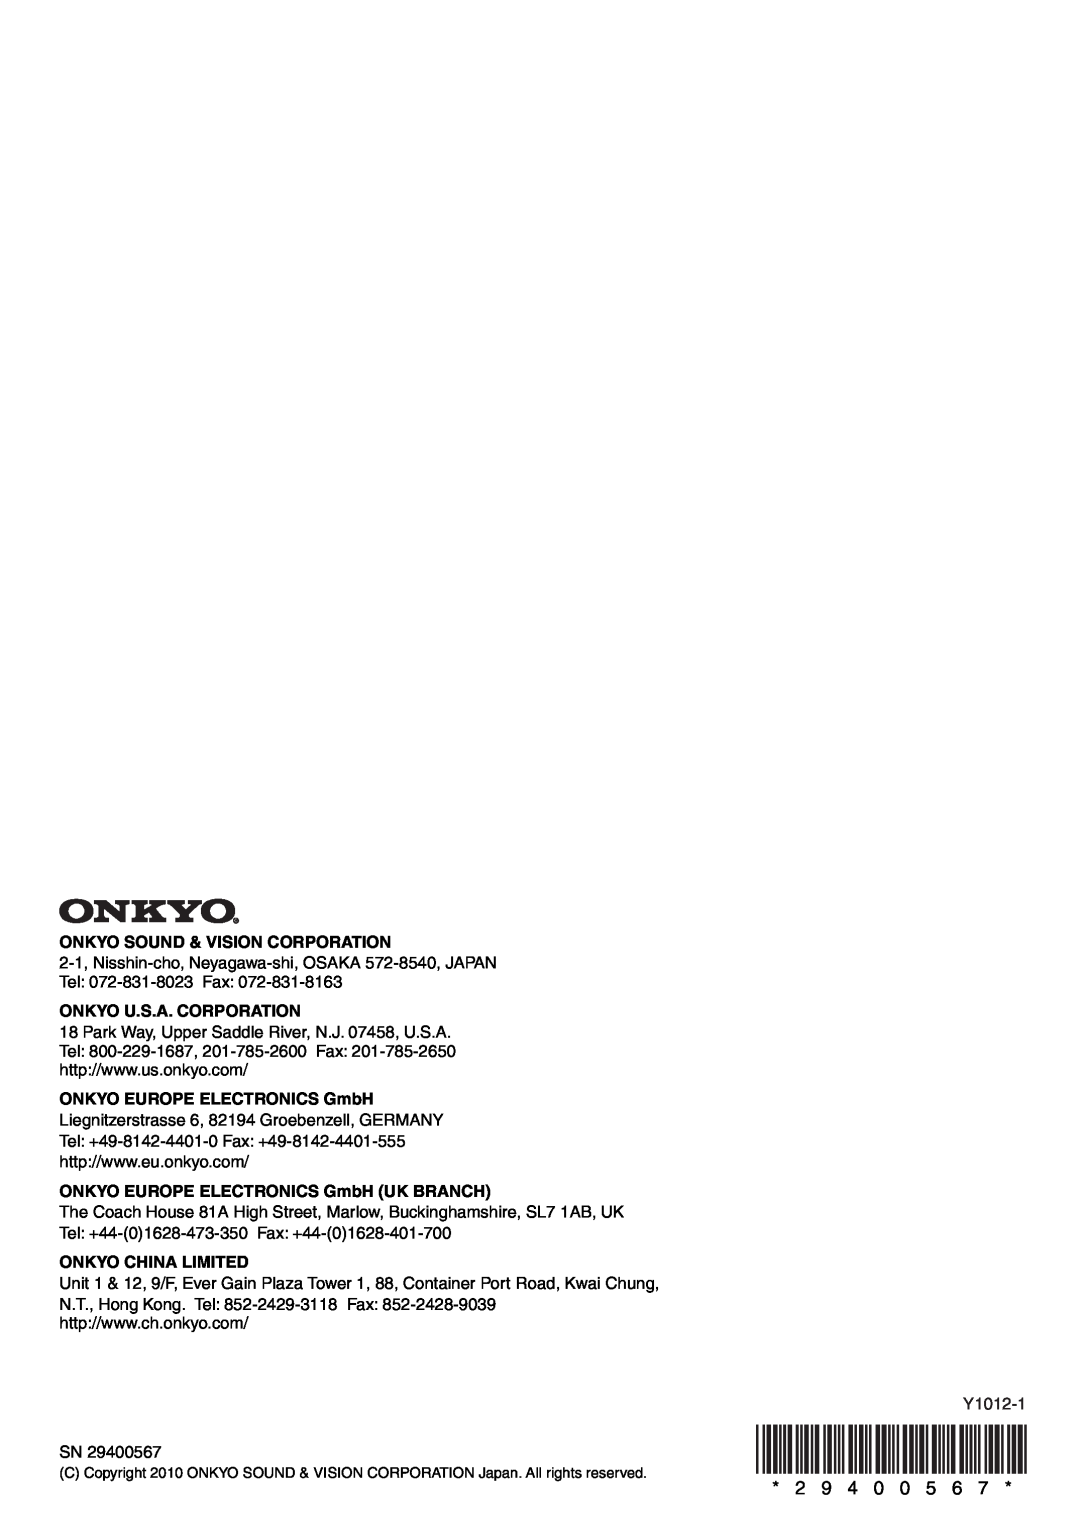 Onkyo HT-RC330 2 9, Onkyo Sound & Vision Corporation, Onkyo U.S.A. Corporation, ONKYO EUROPE ELECTRONICS GmbH 